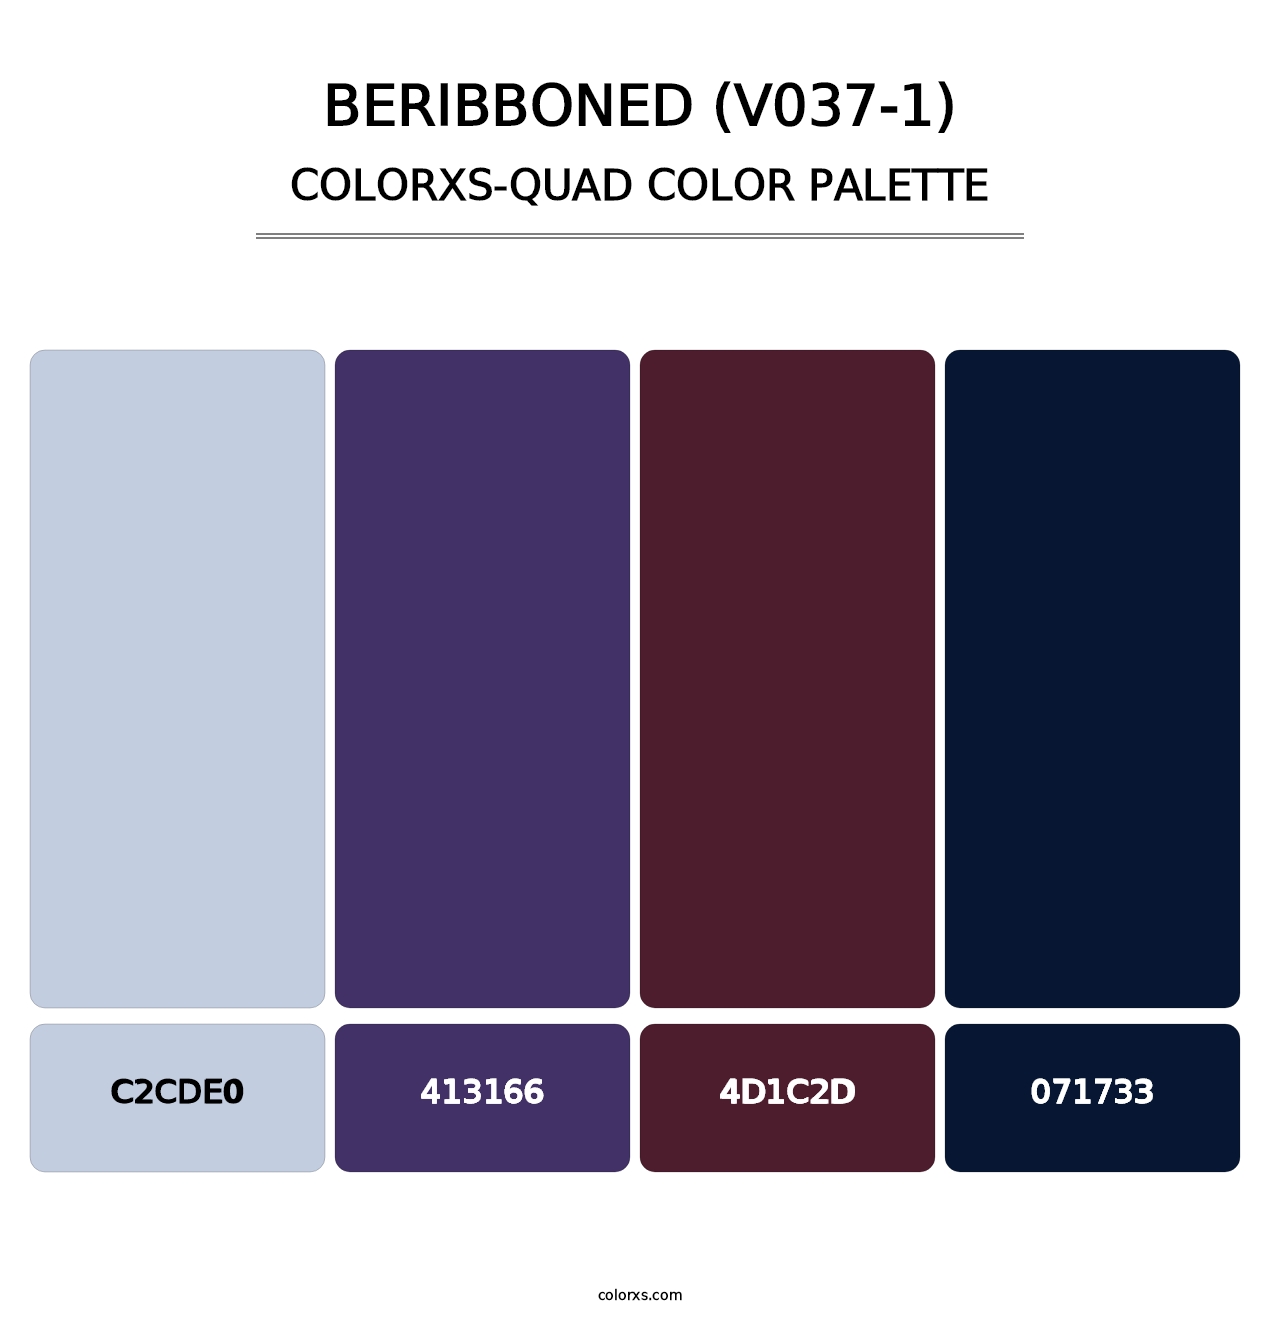 Beribboned (V037-1) - Colorxs Quad Palette